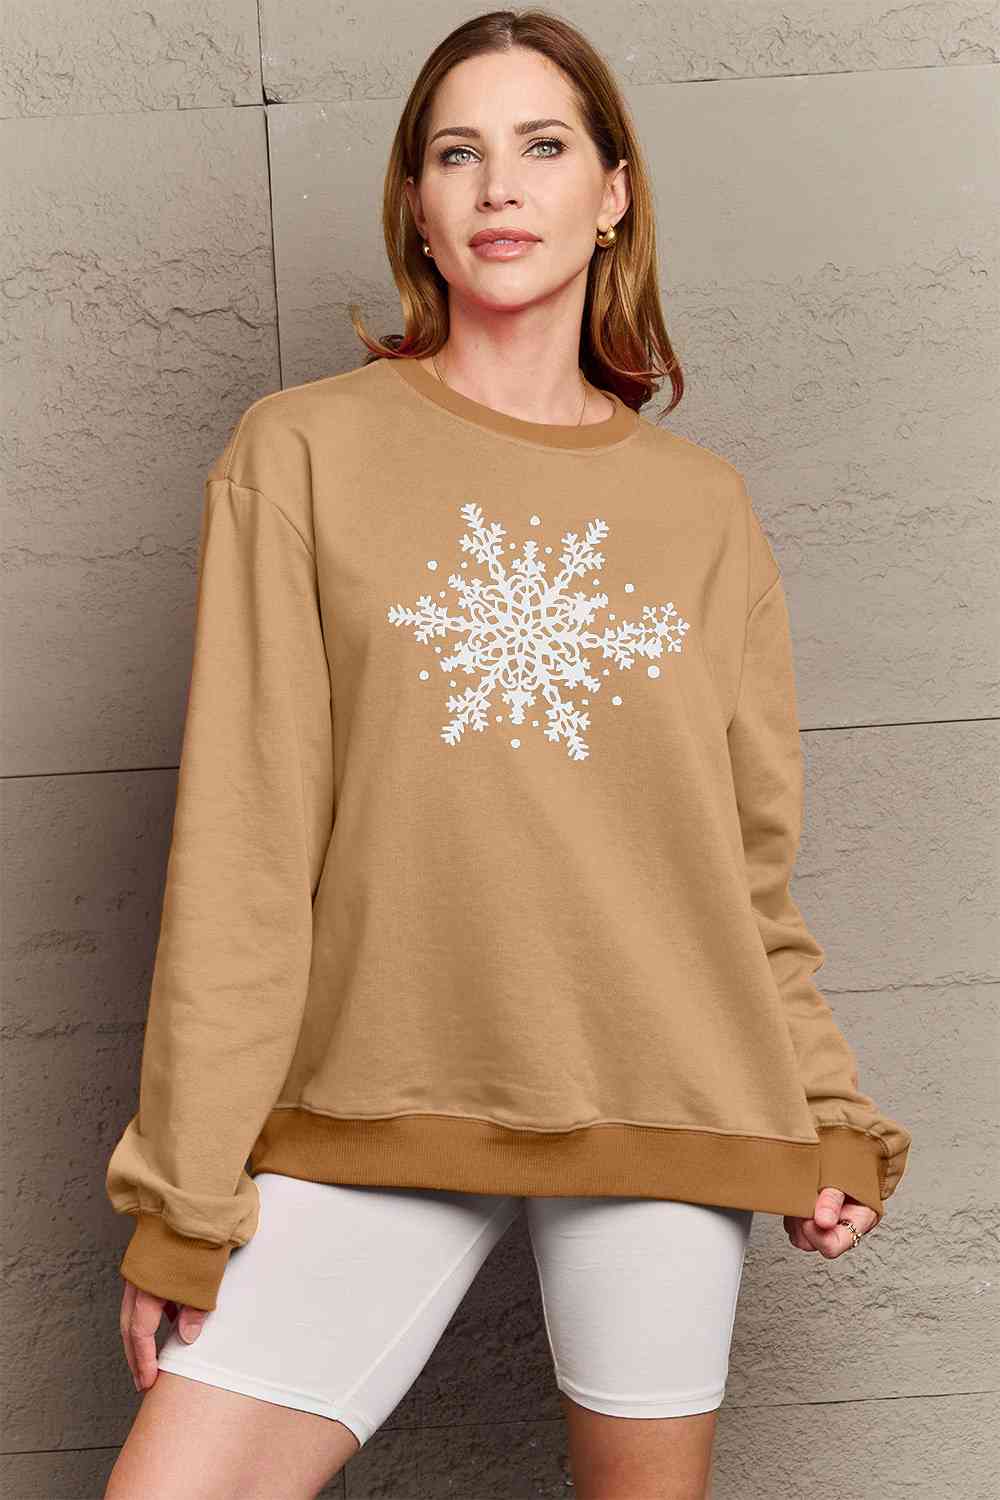 Simply Love Full Size Snowflake Graphic Sweatshirt BLUE ZONE PLANET